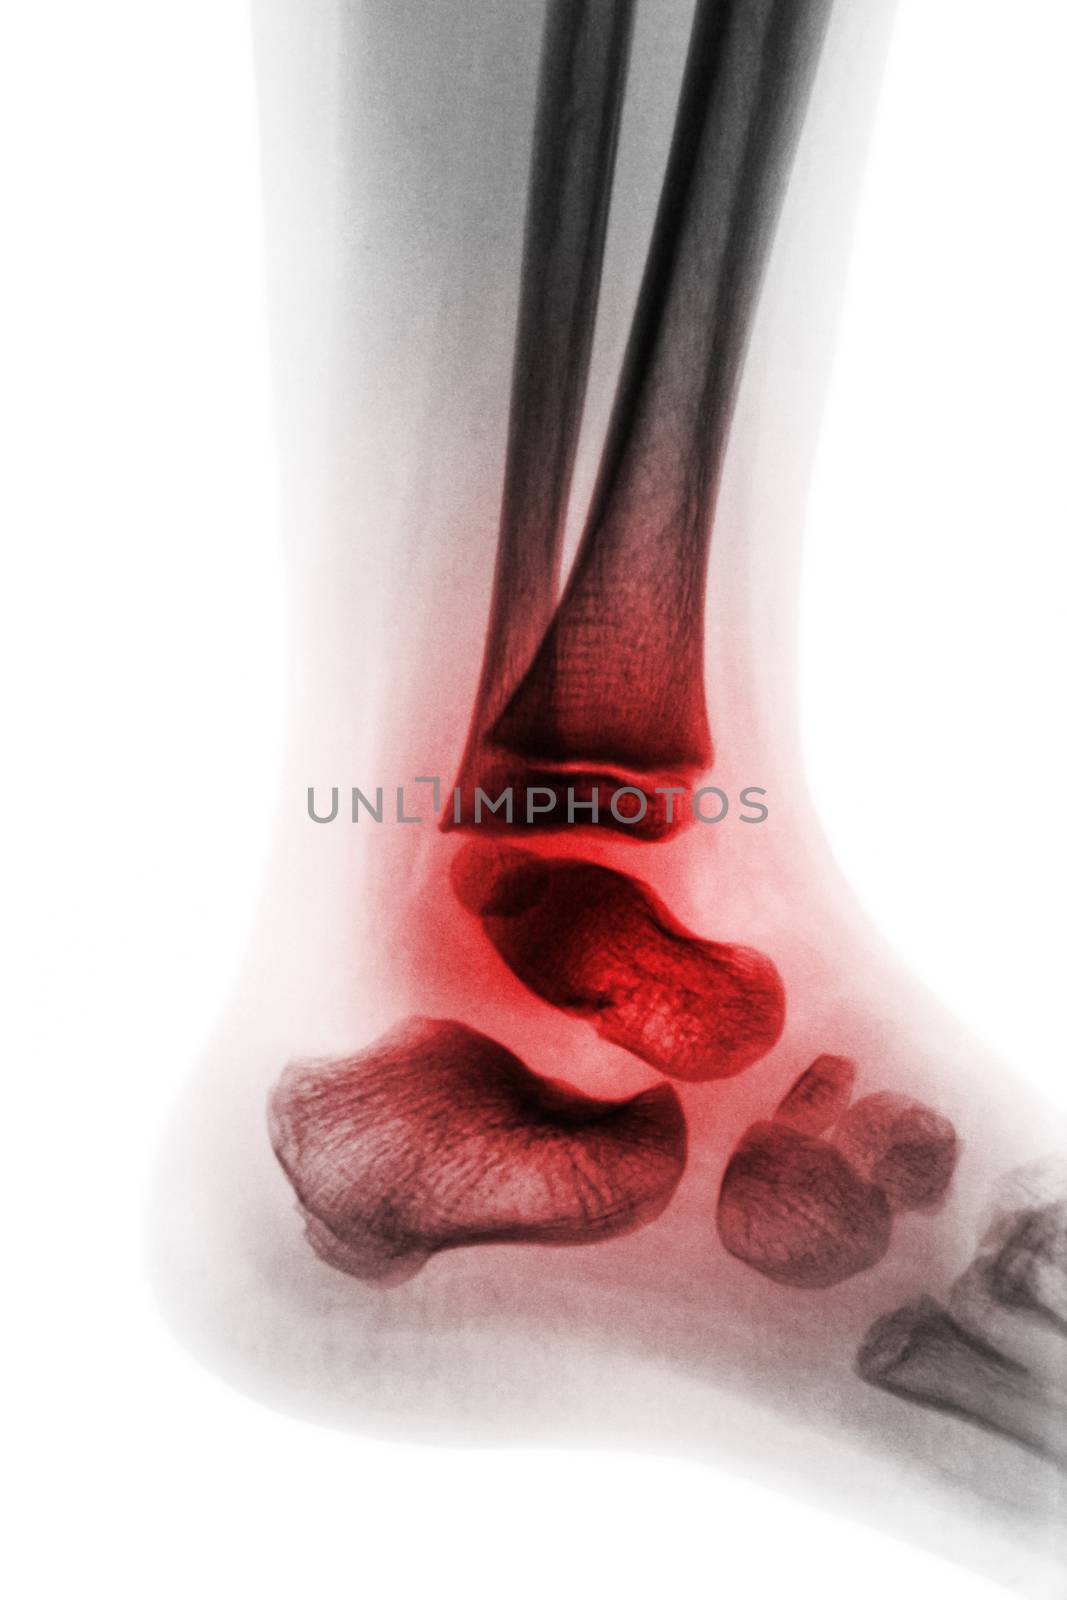 Arthritis of ankle ( Juvenile rheumatoid ) by stockdevil